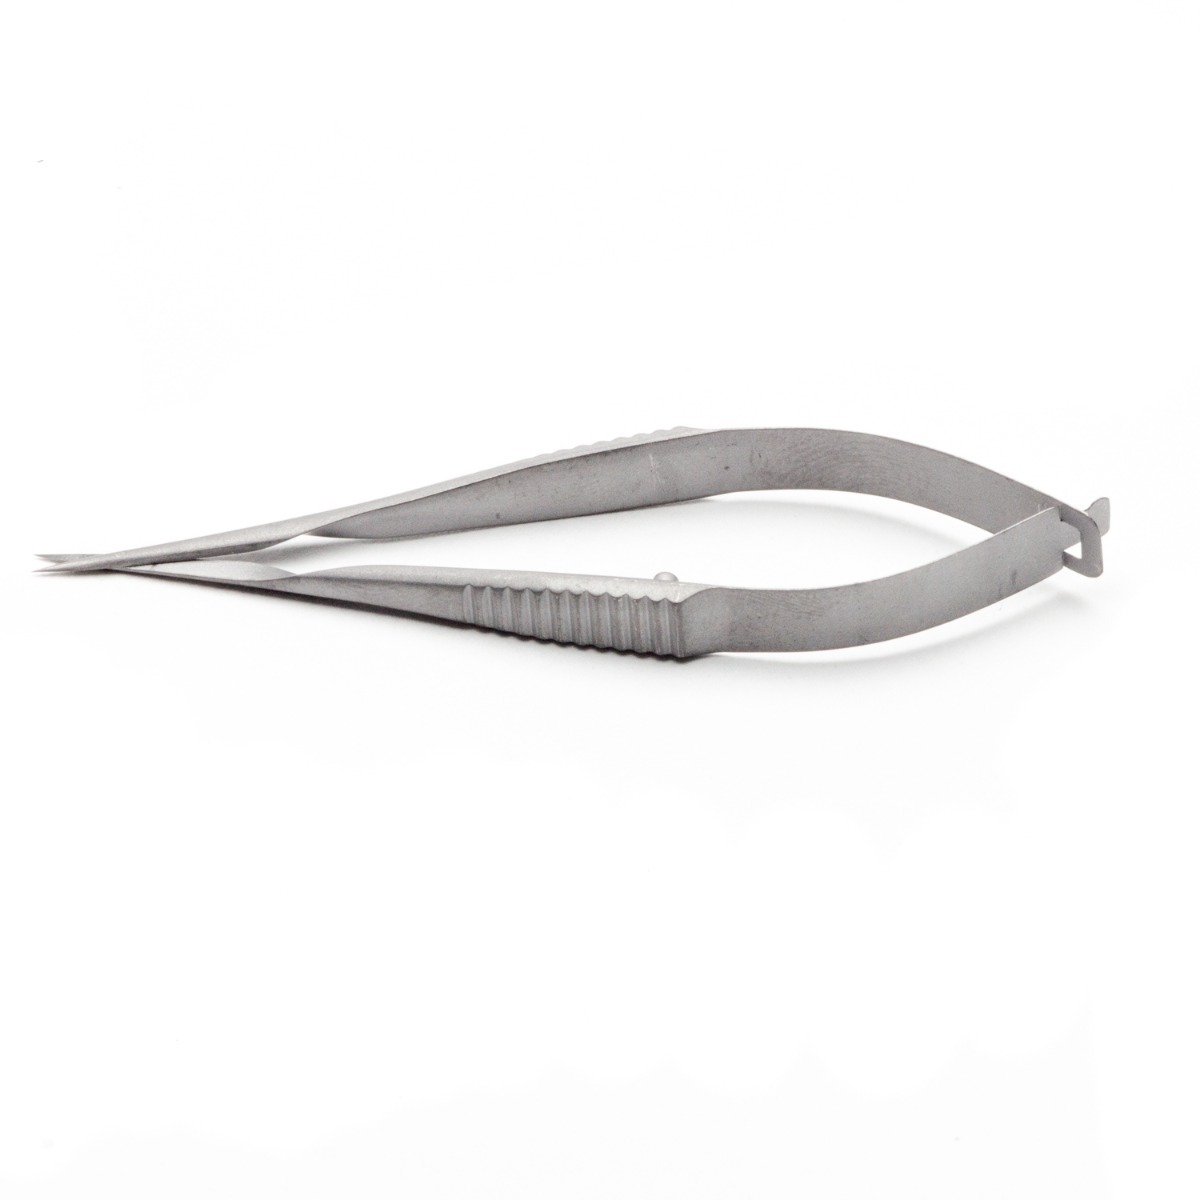 Super Cut and Ultra Sharp Scissors – Scanlan International